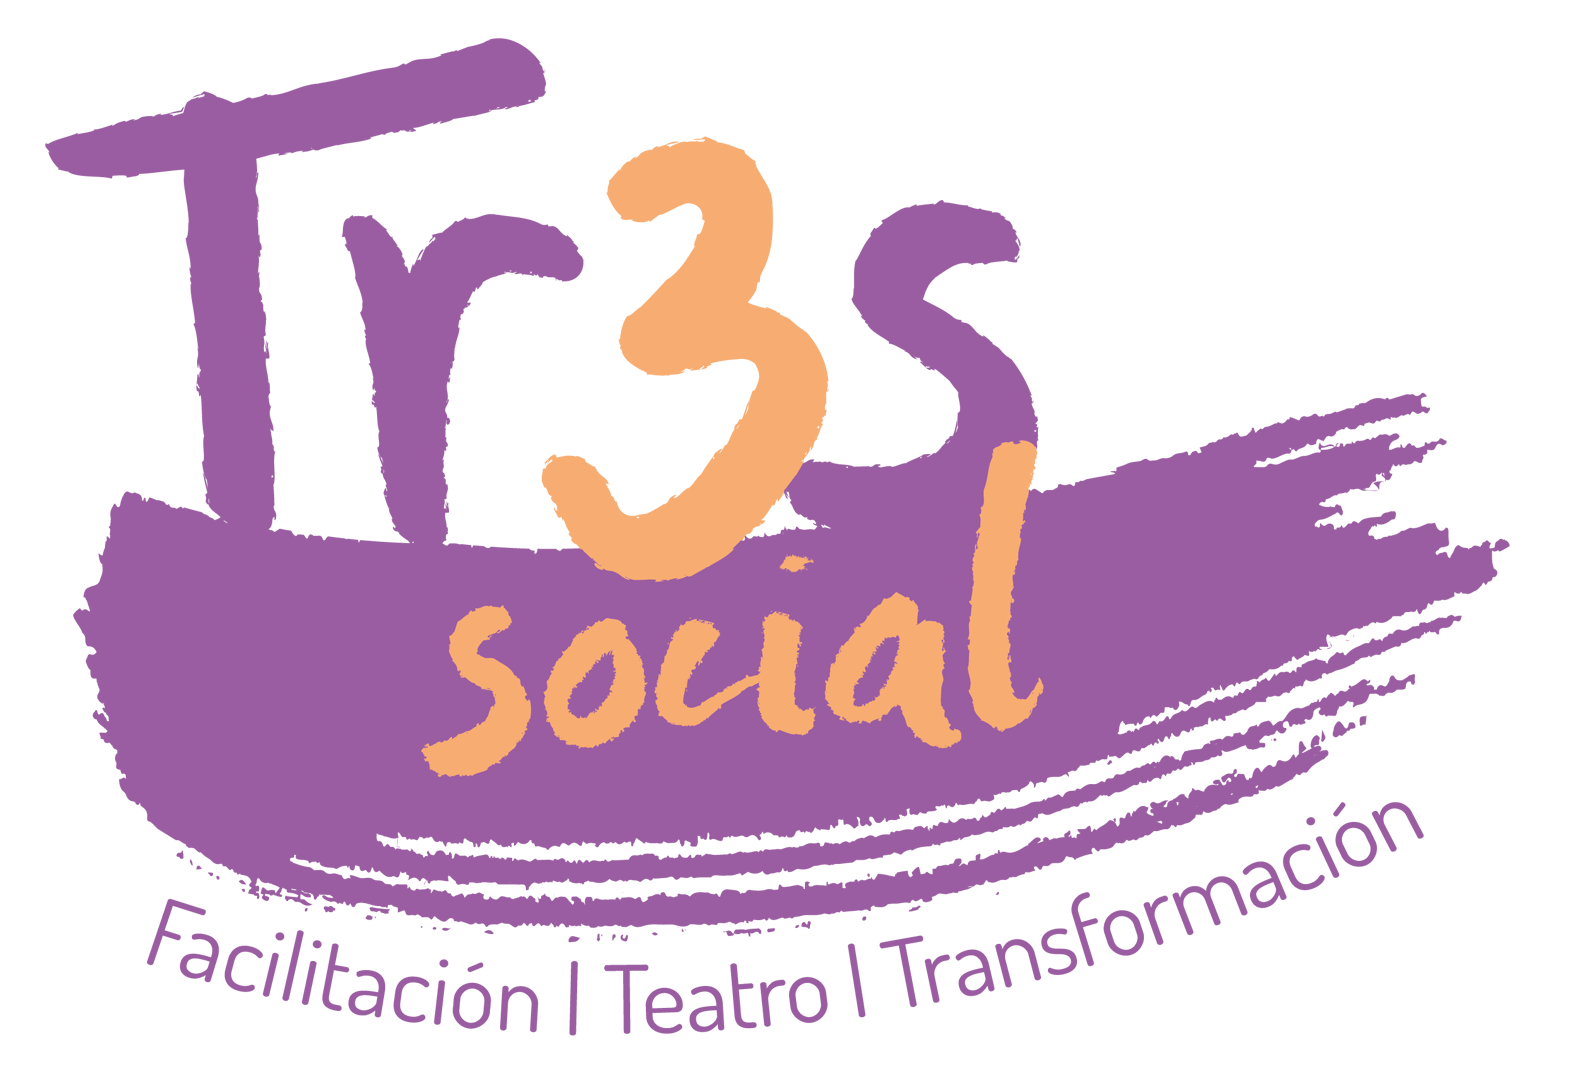 tr3s-social-mediacion-teatro-transformacion